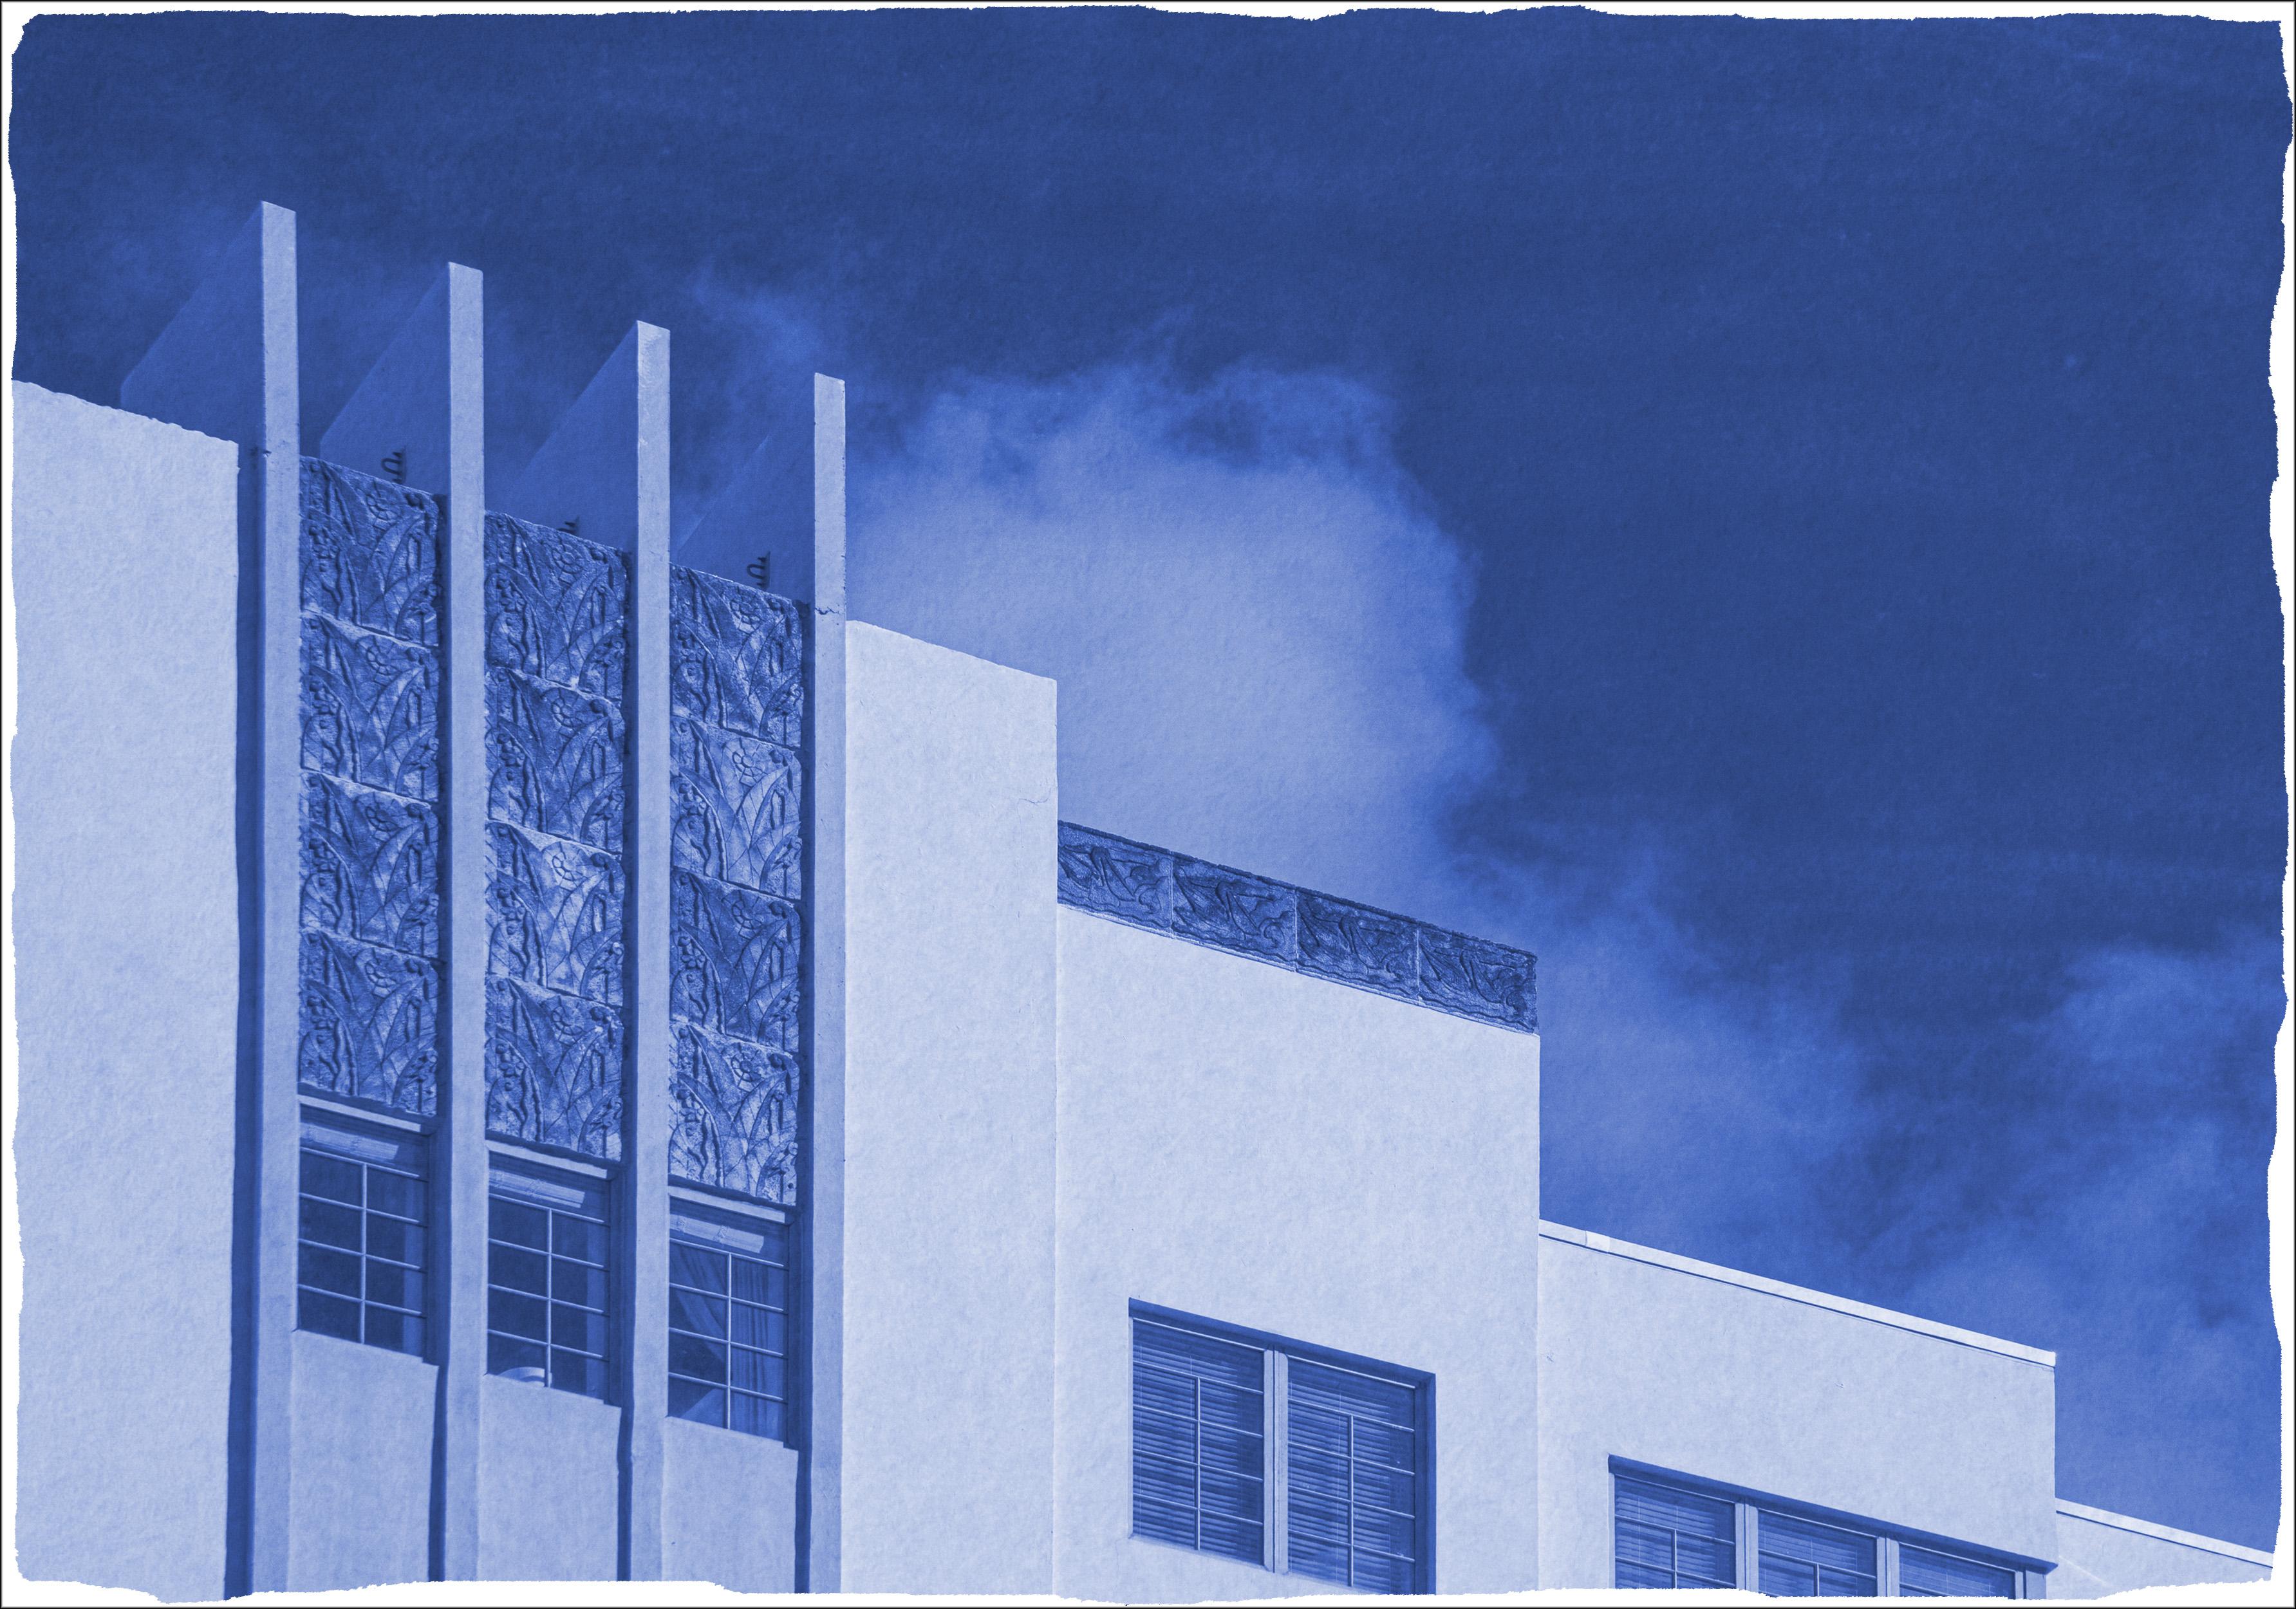 Thirties Building with Sky, Handmade Cyanotype Print in Blue Tones, Miami Style